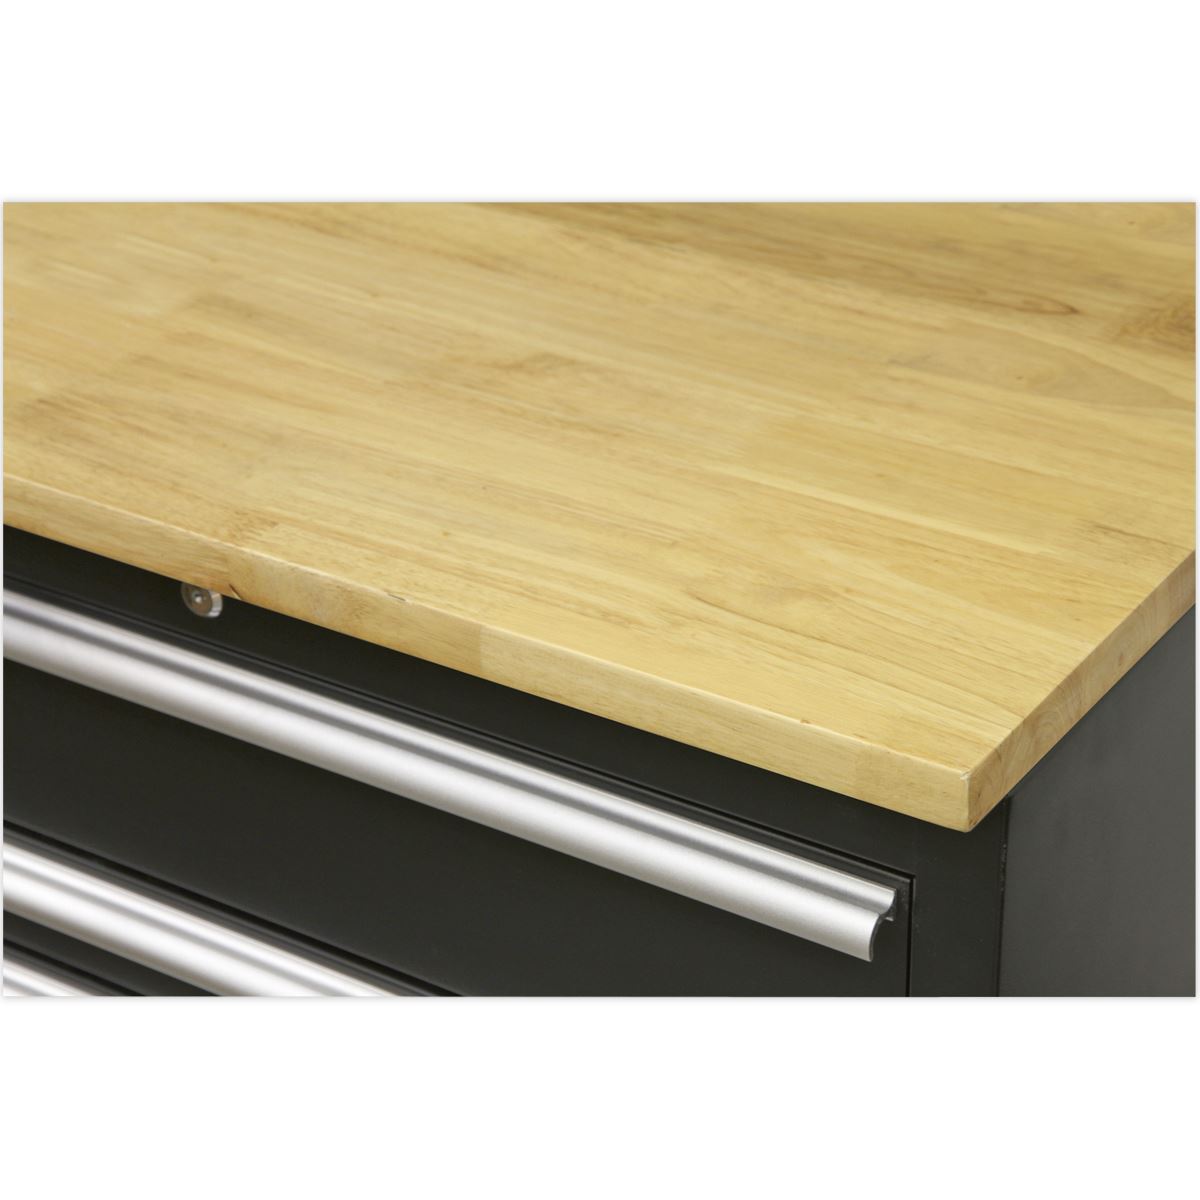 Sealey Premier Hardwood Worktop 775mm